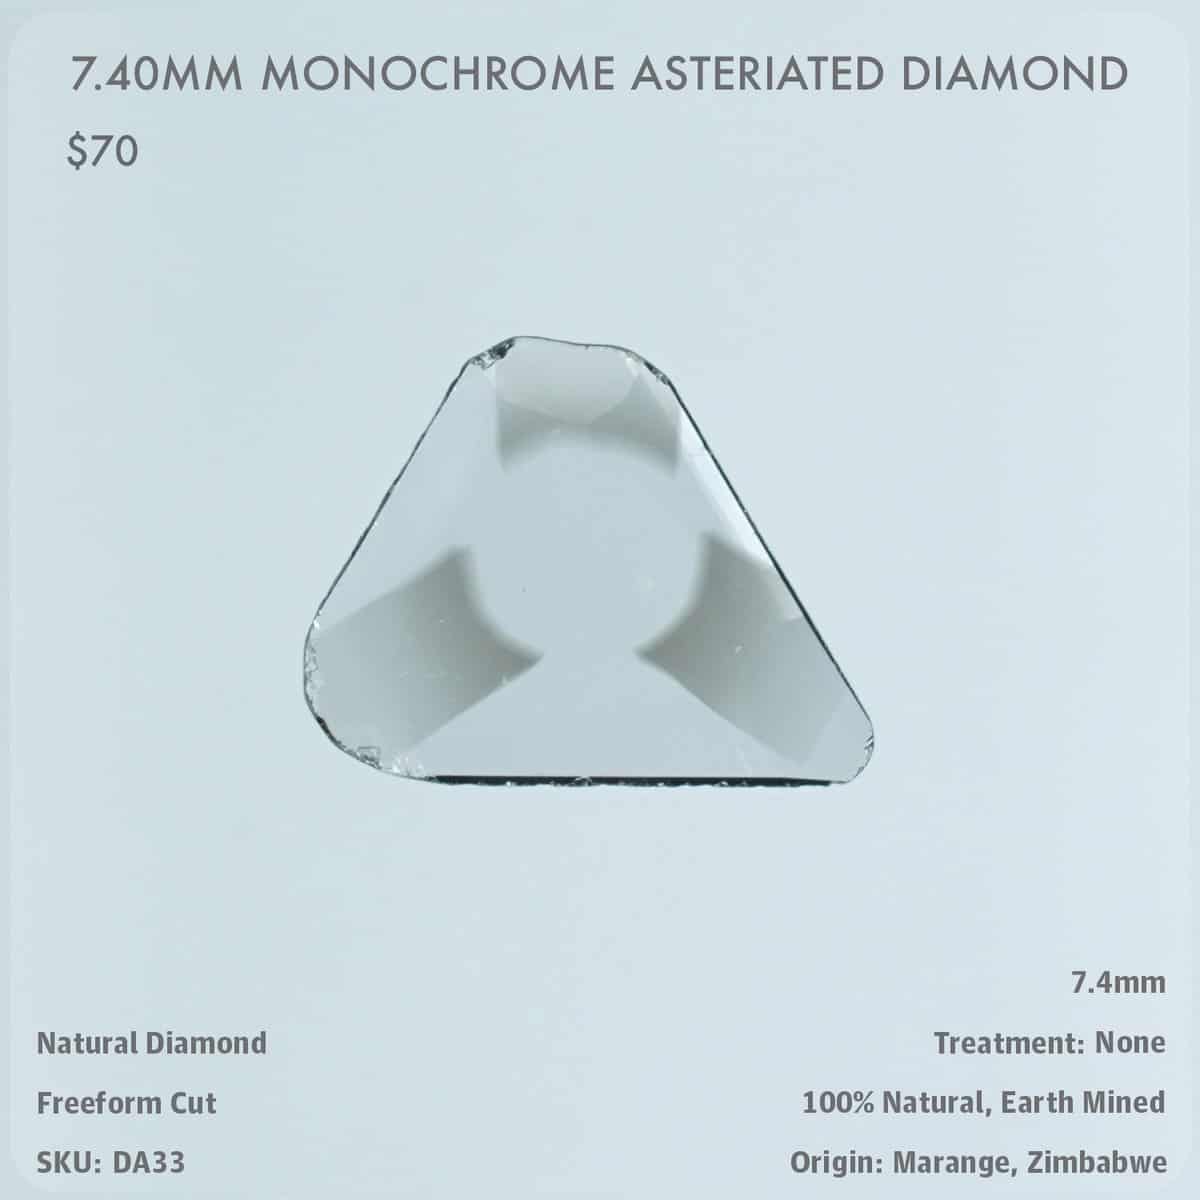 7.40mm Monochrome Asteriated Diamond